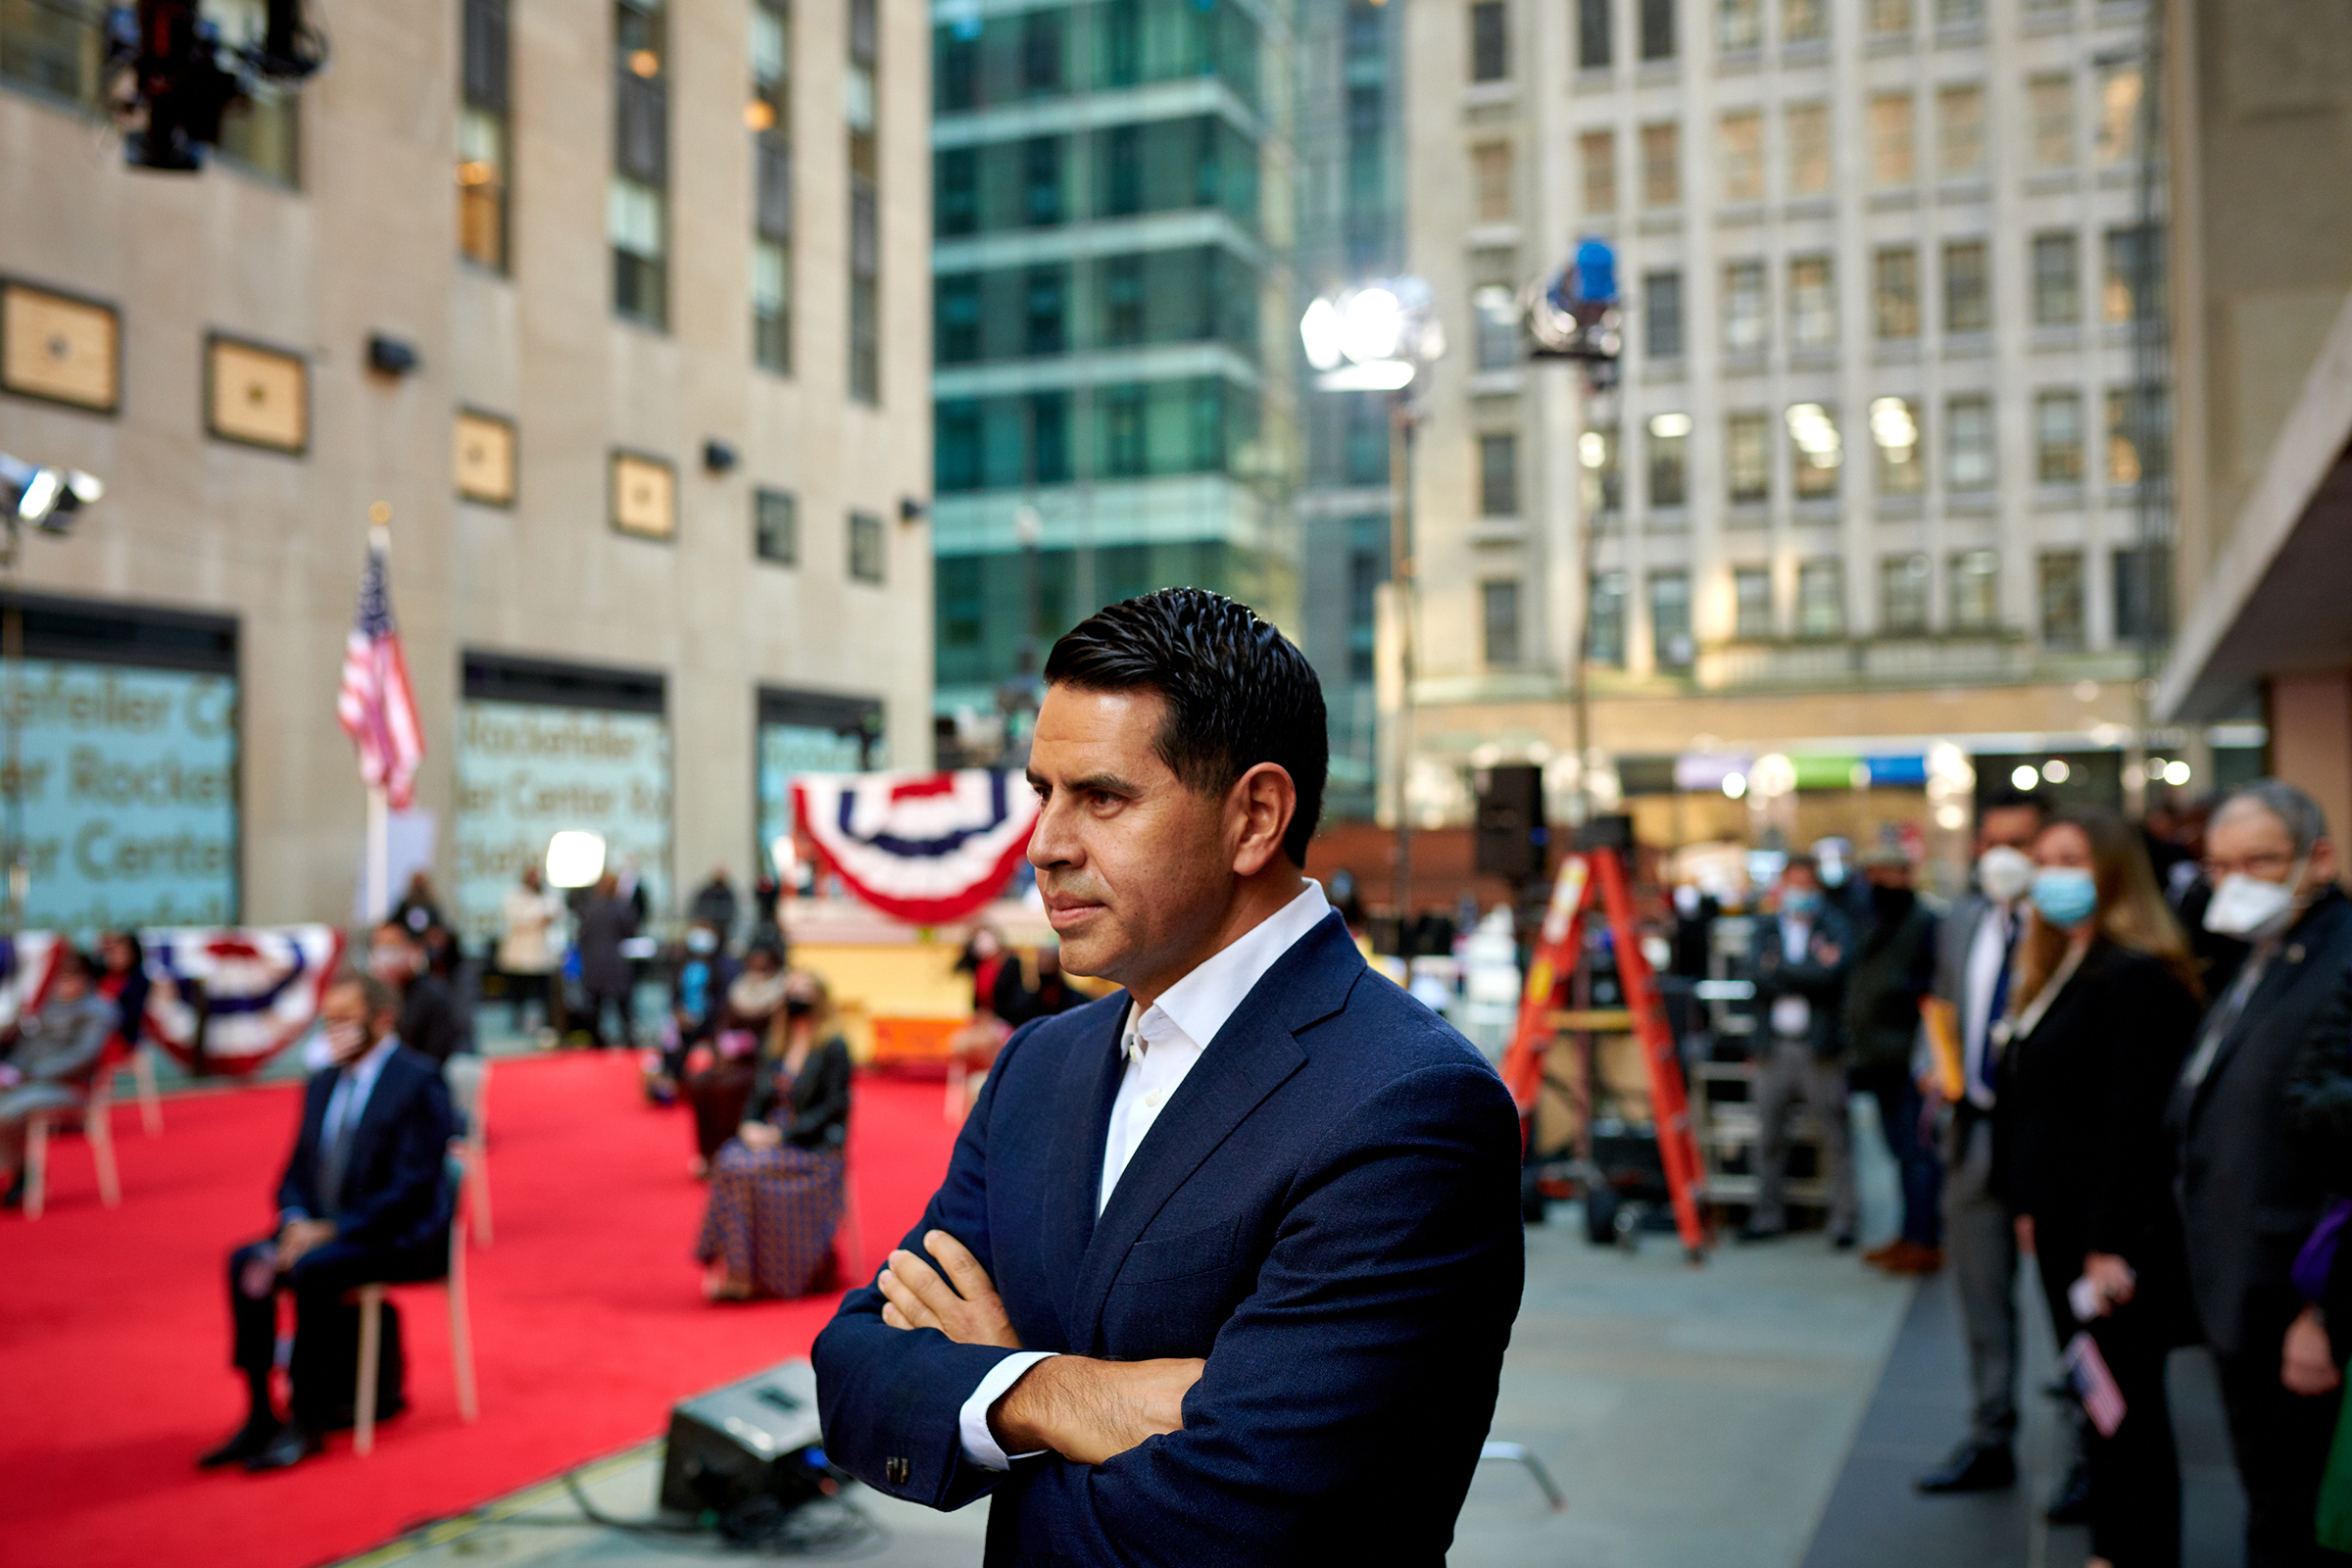 Media executive Cesar Conde at Rockefeller Plaza in April 2021.